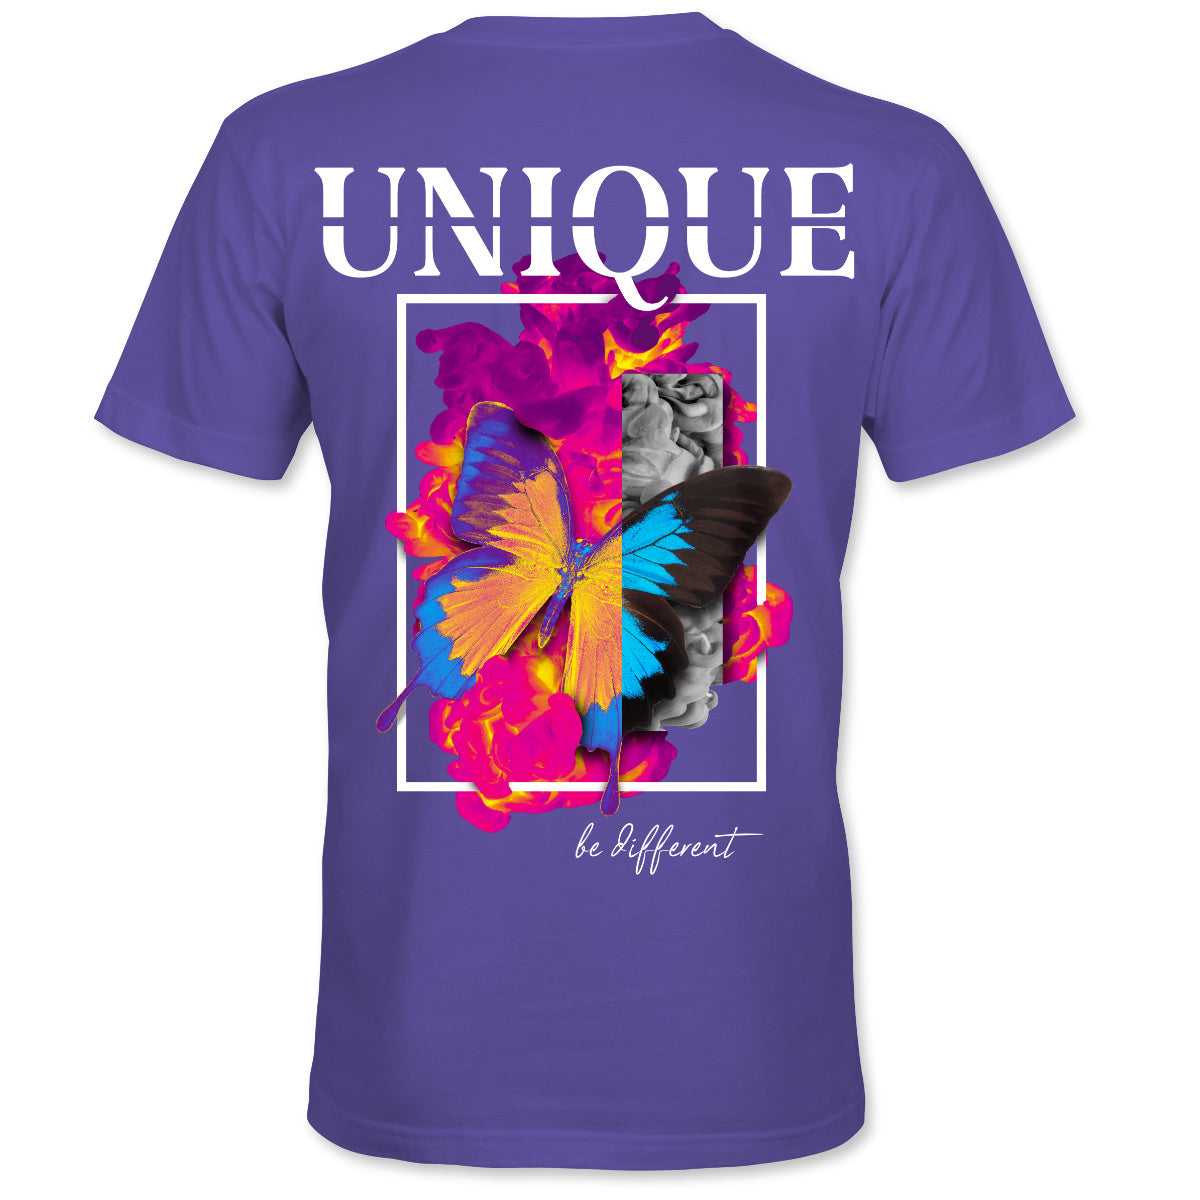 Manevito Fashion T-Shirt UNIQUE be different